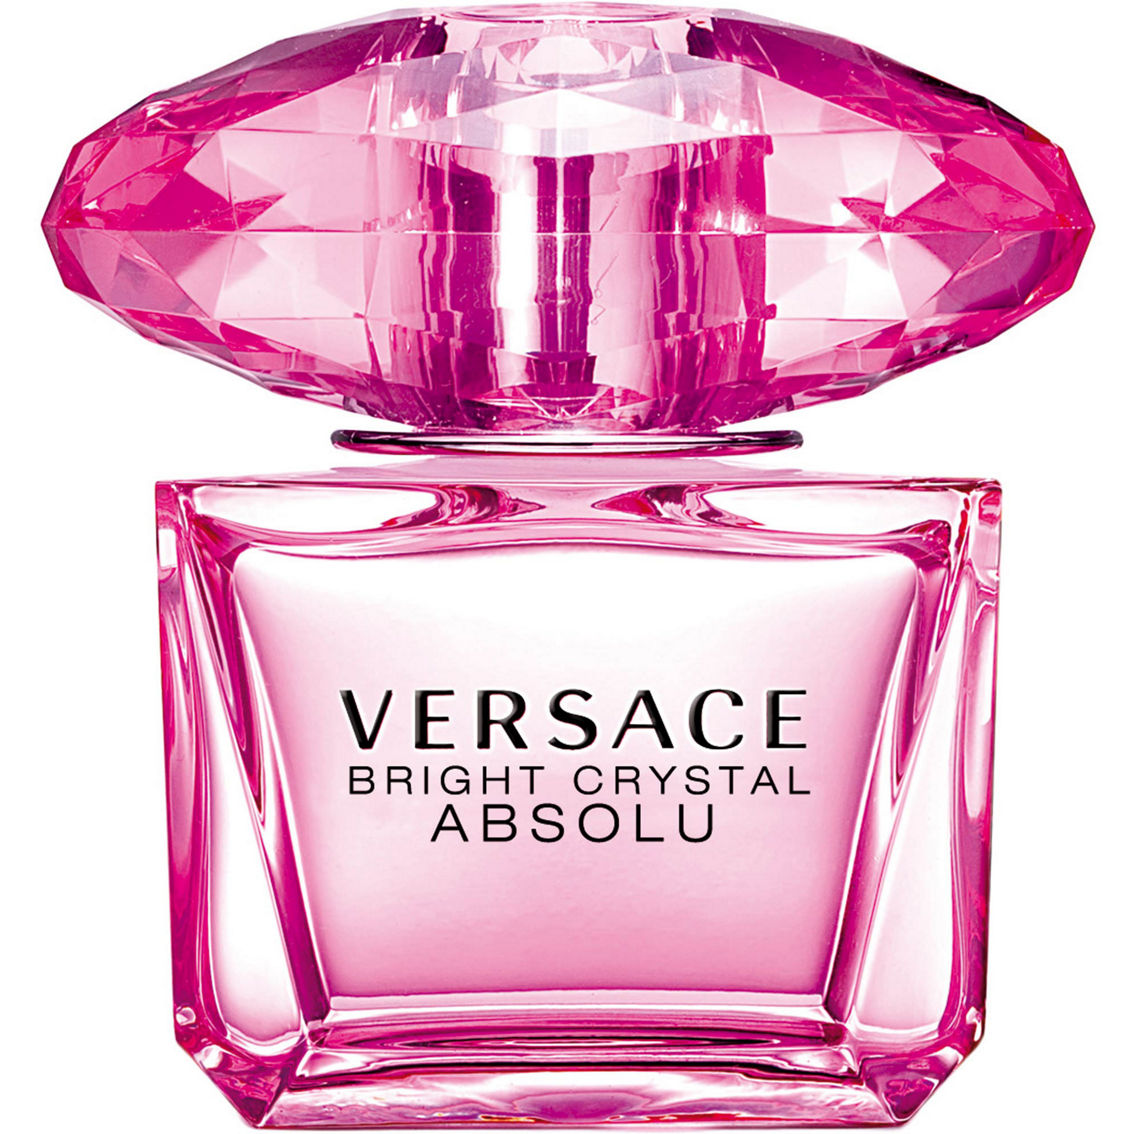 versace bright crystal perfume shop